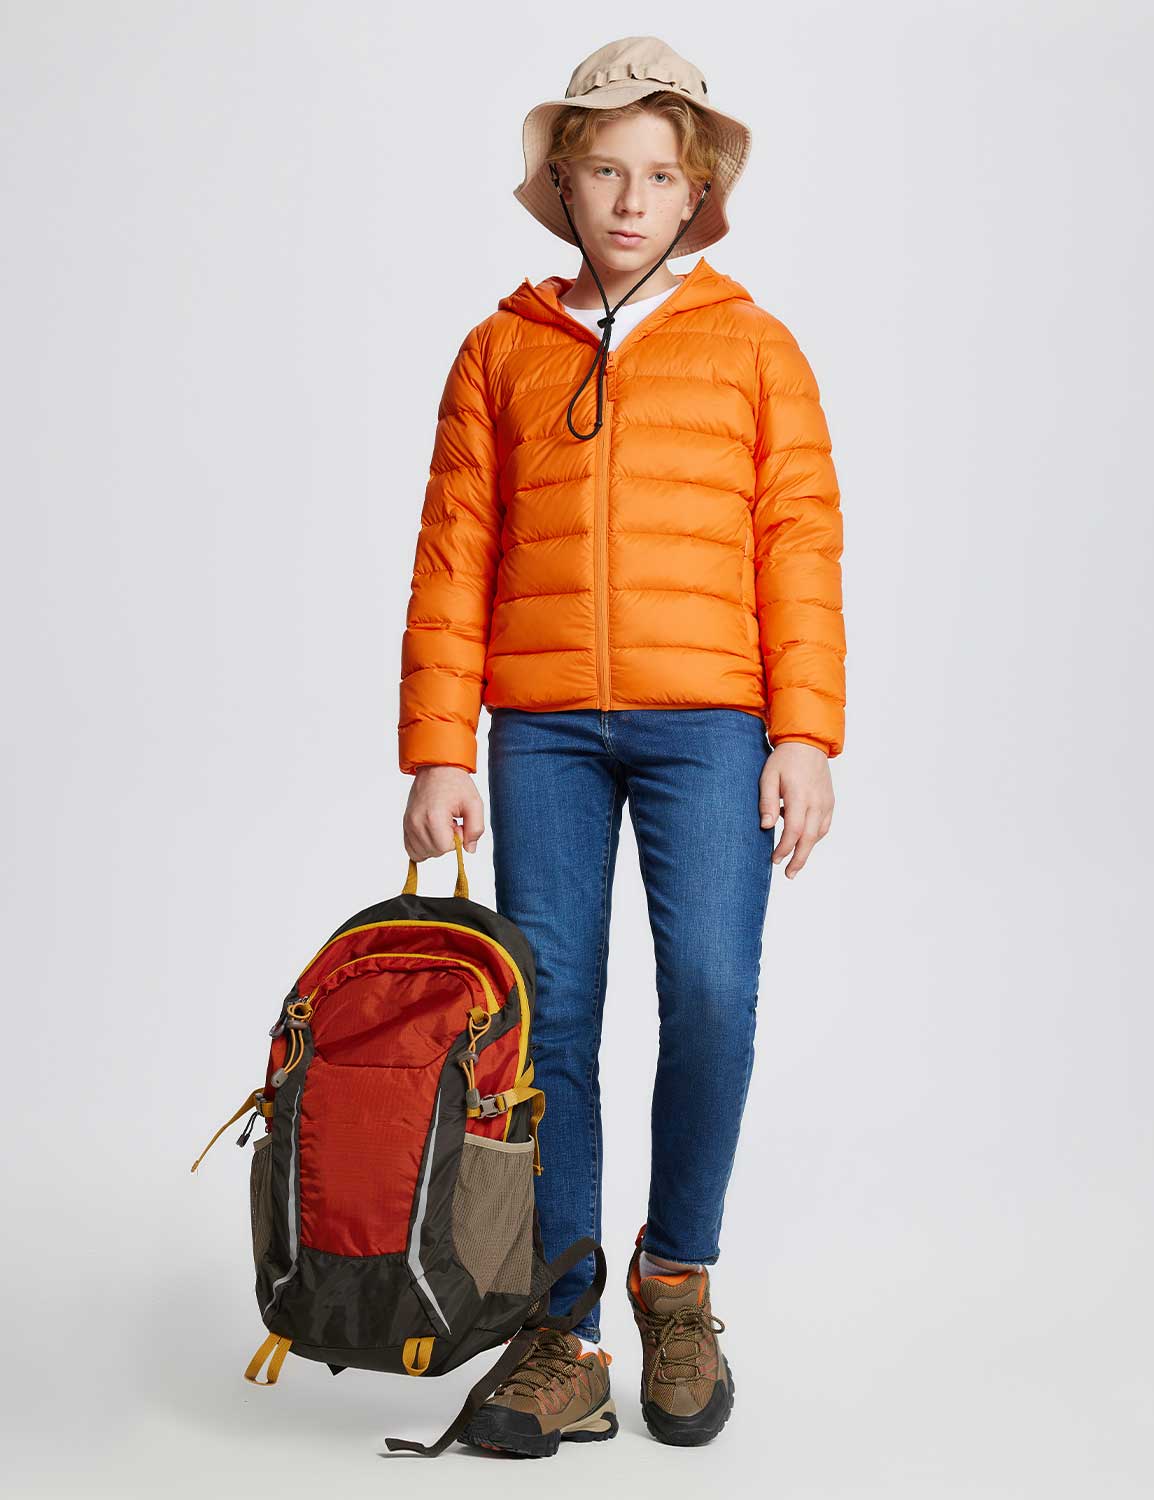 Baleaf Kid's Hooded Puffer Jackets dga066 Orange Full